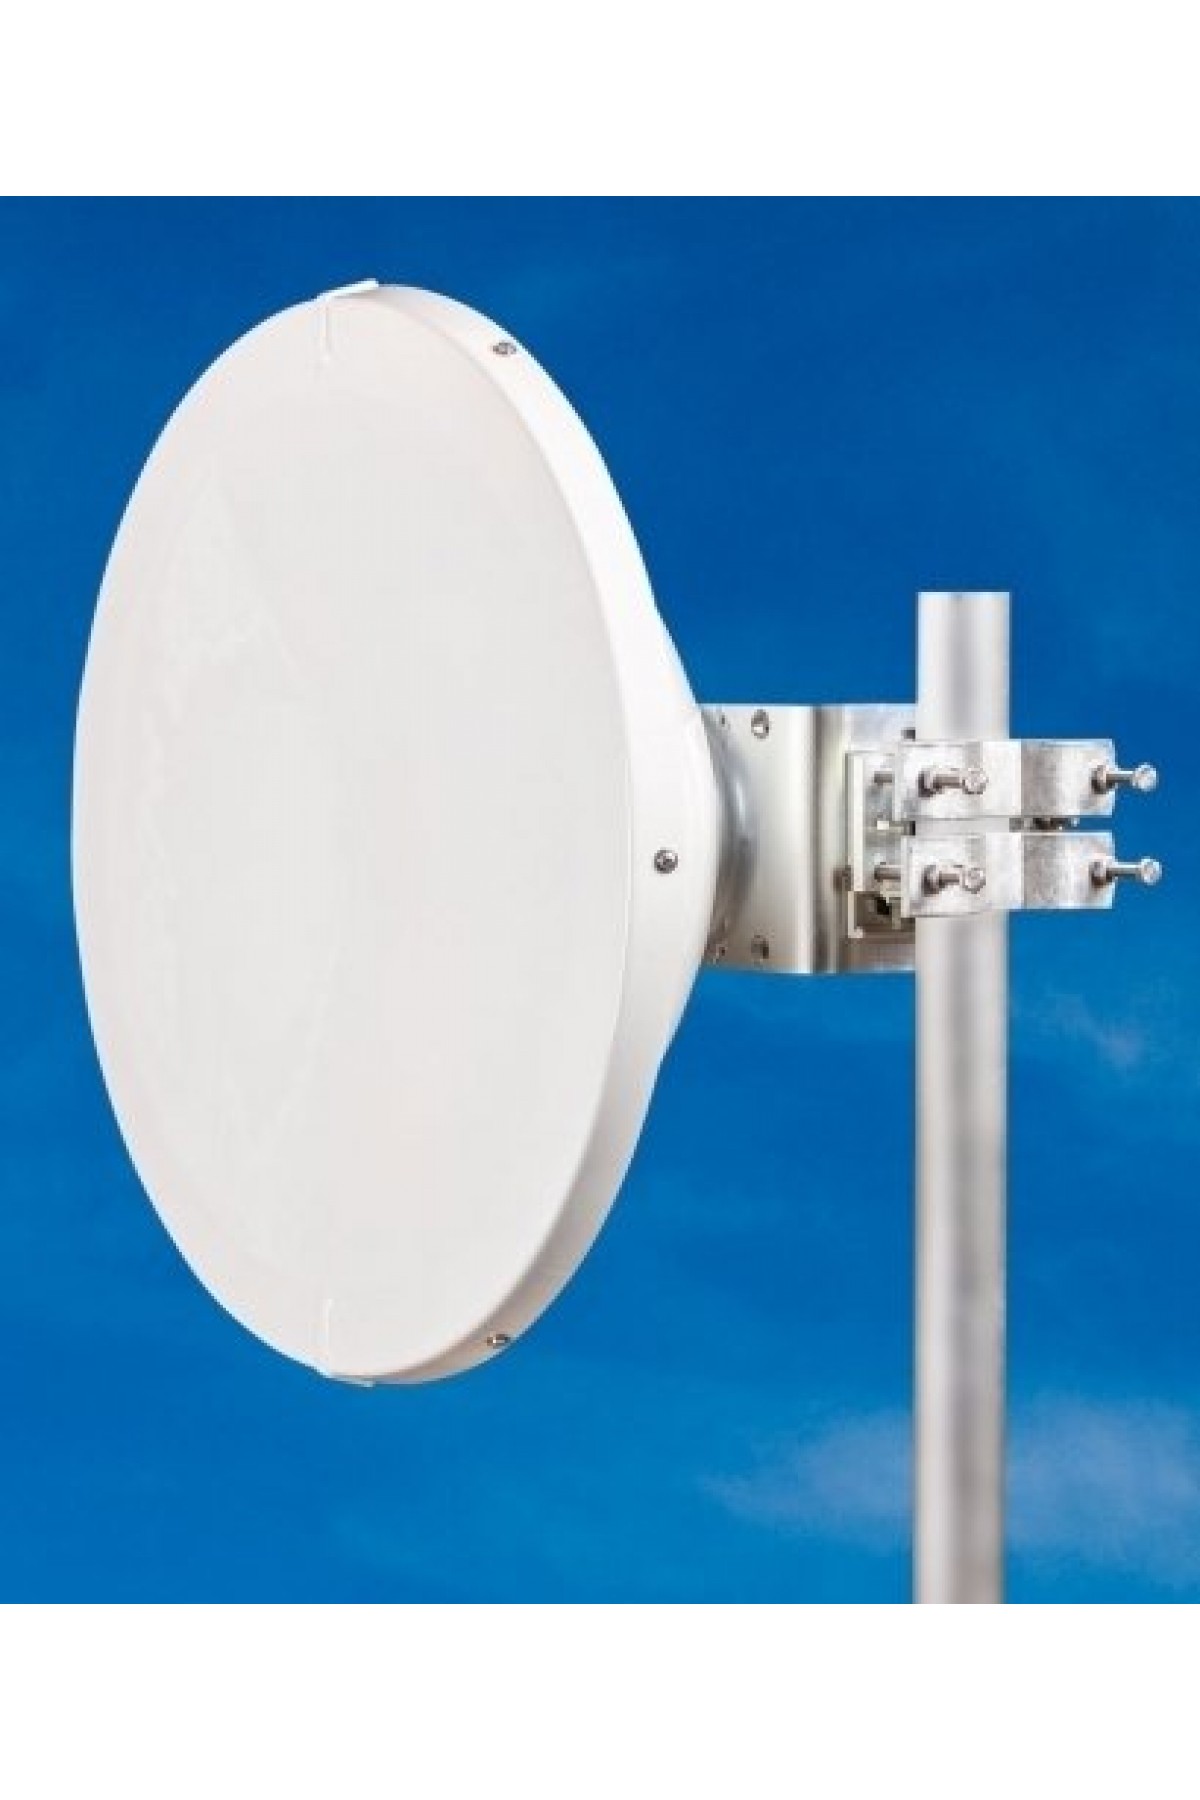 Parabolic antenna JRMC-680-10/11